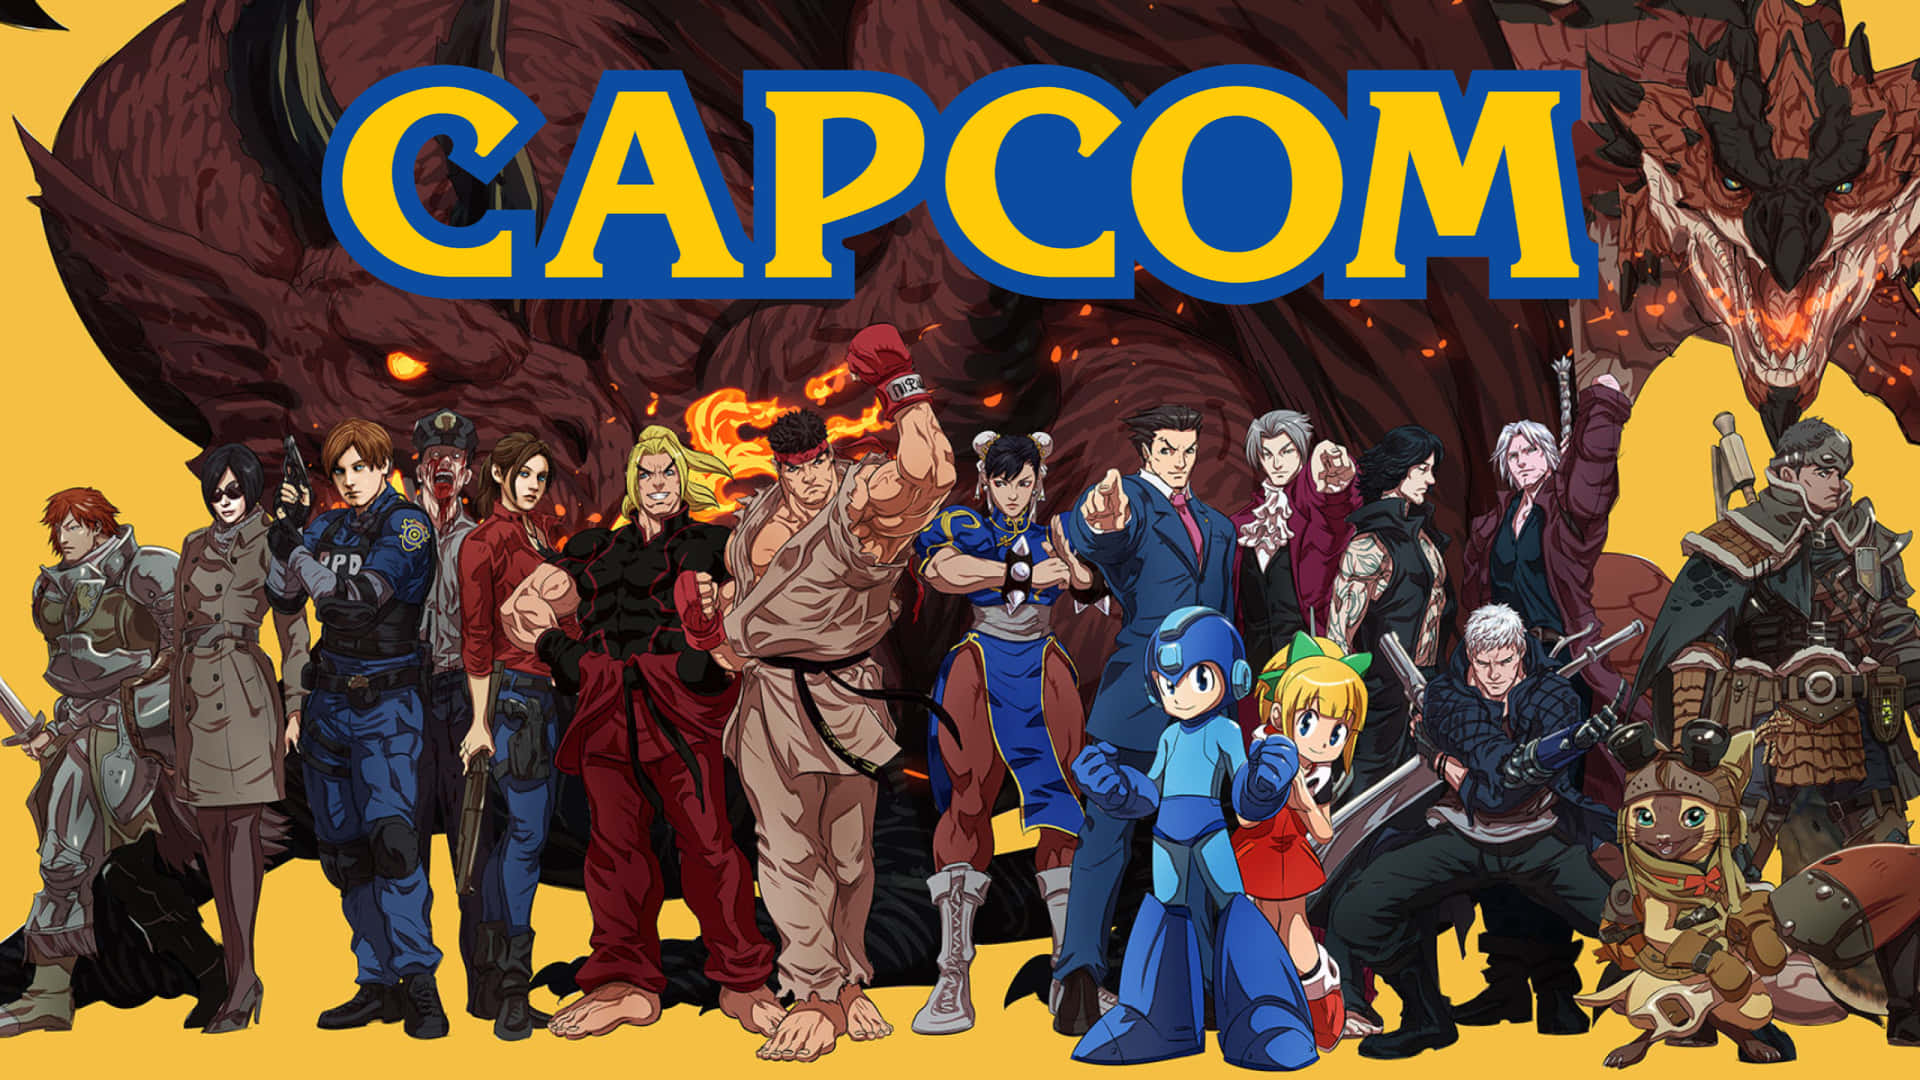 Celebrate the classic Capcom games!